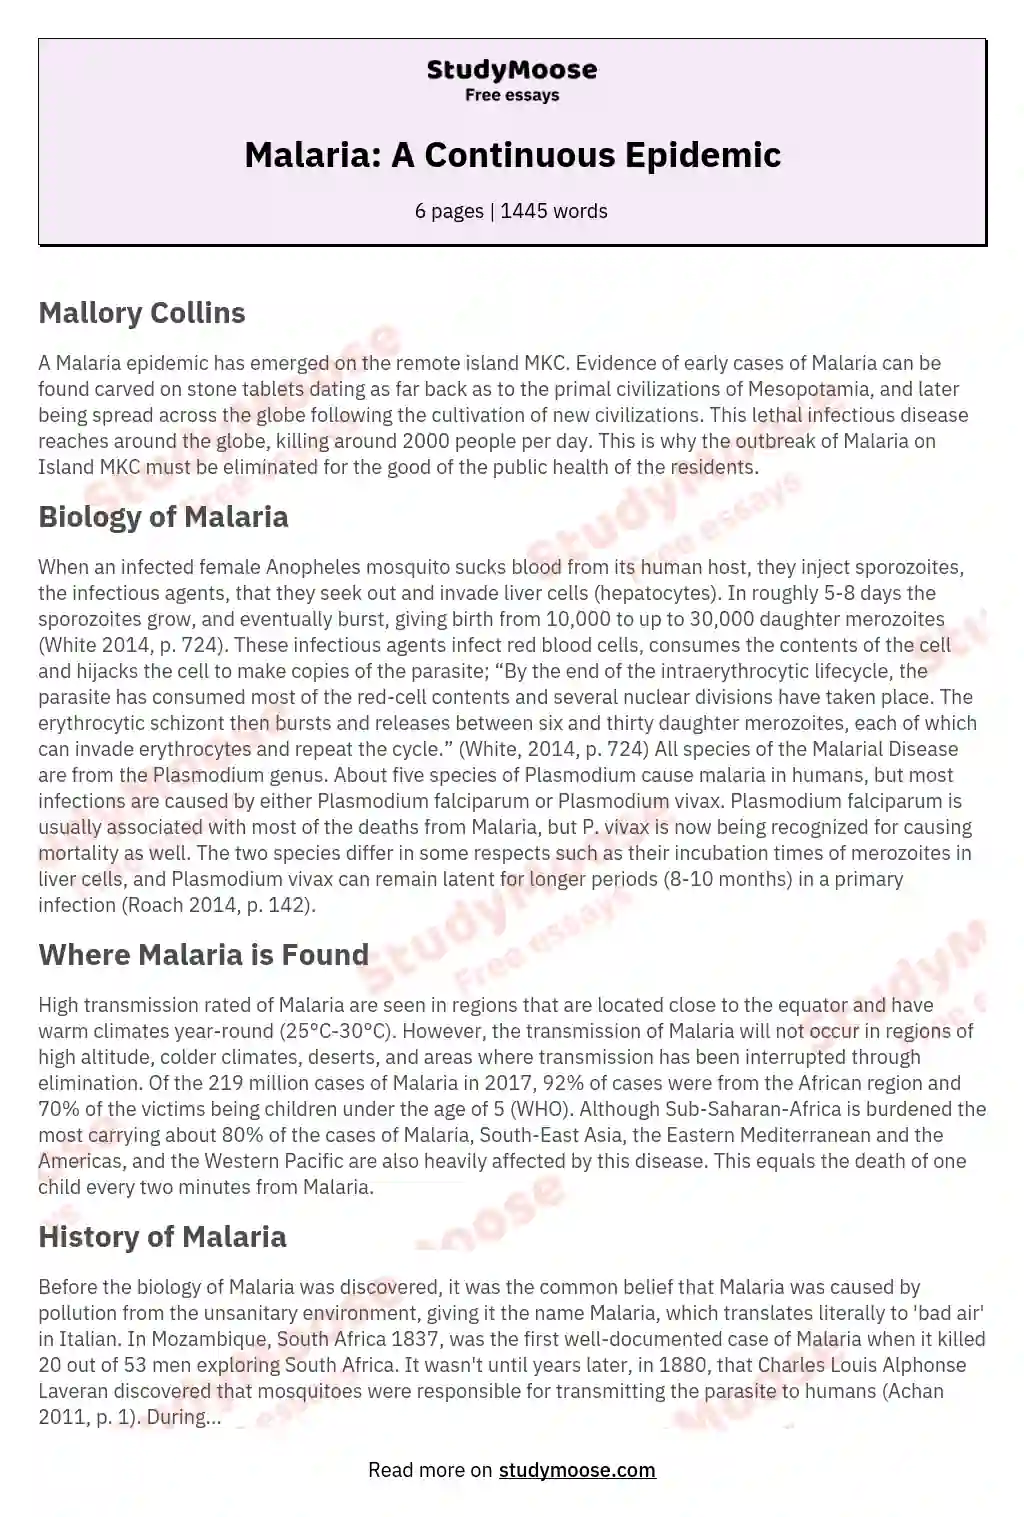 Malaria: A Continuous Epidemic essay